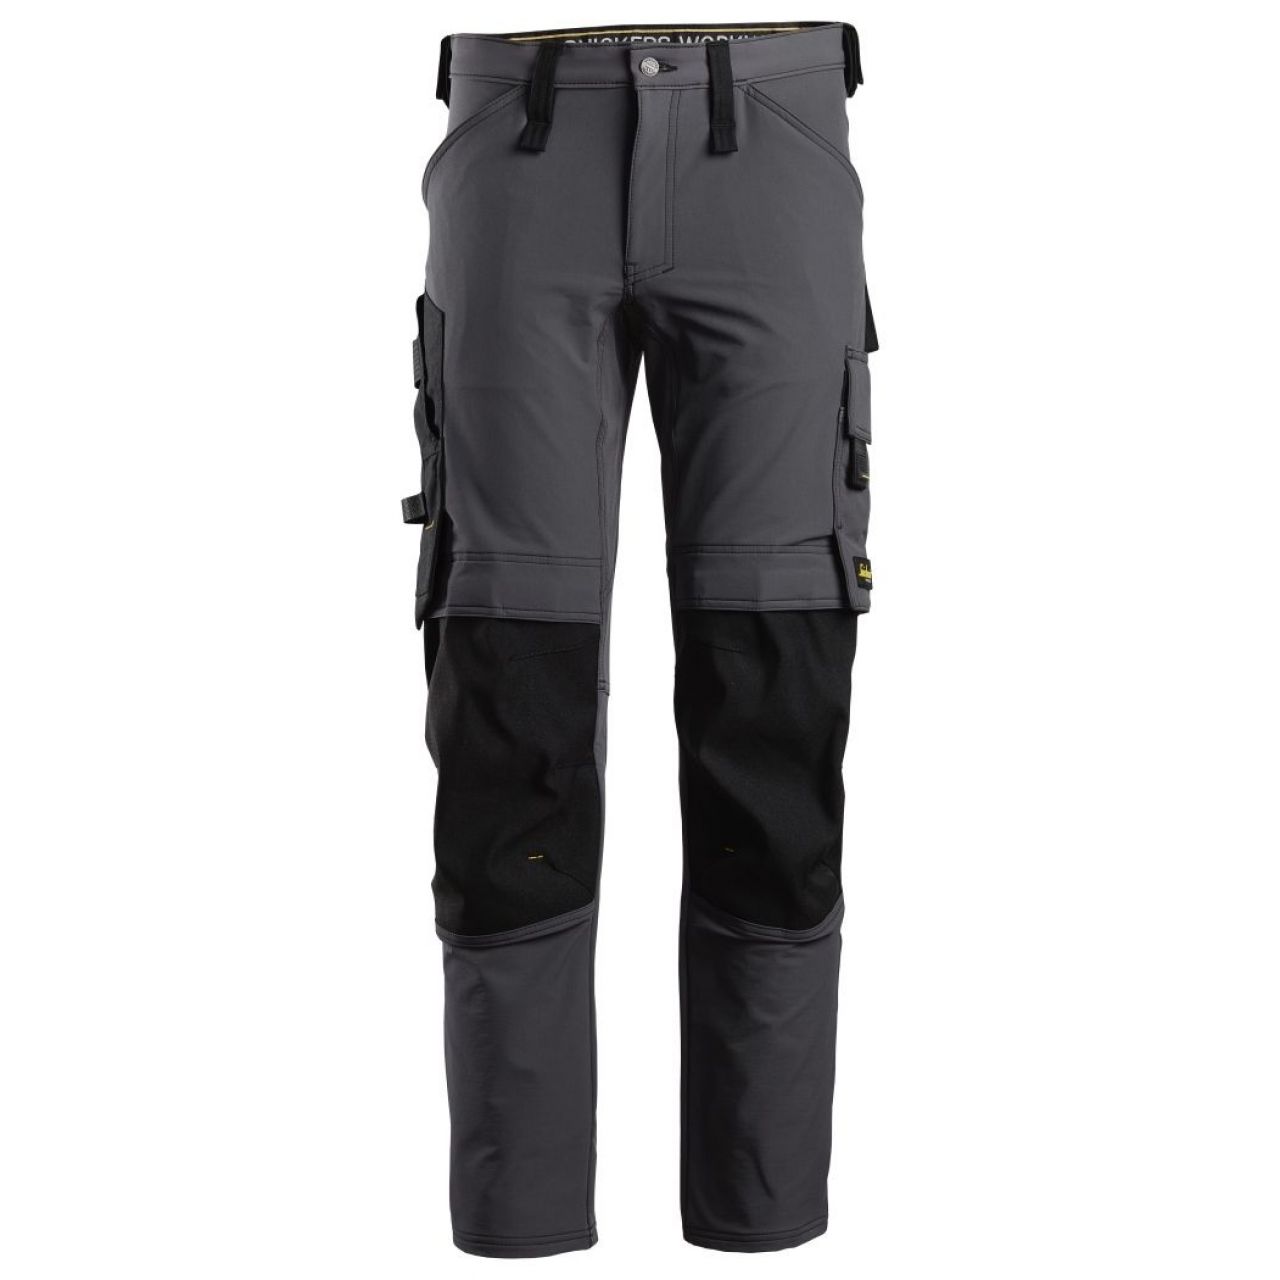 Pantalon elastico AllroundWork gris acero-negro talla 256